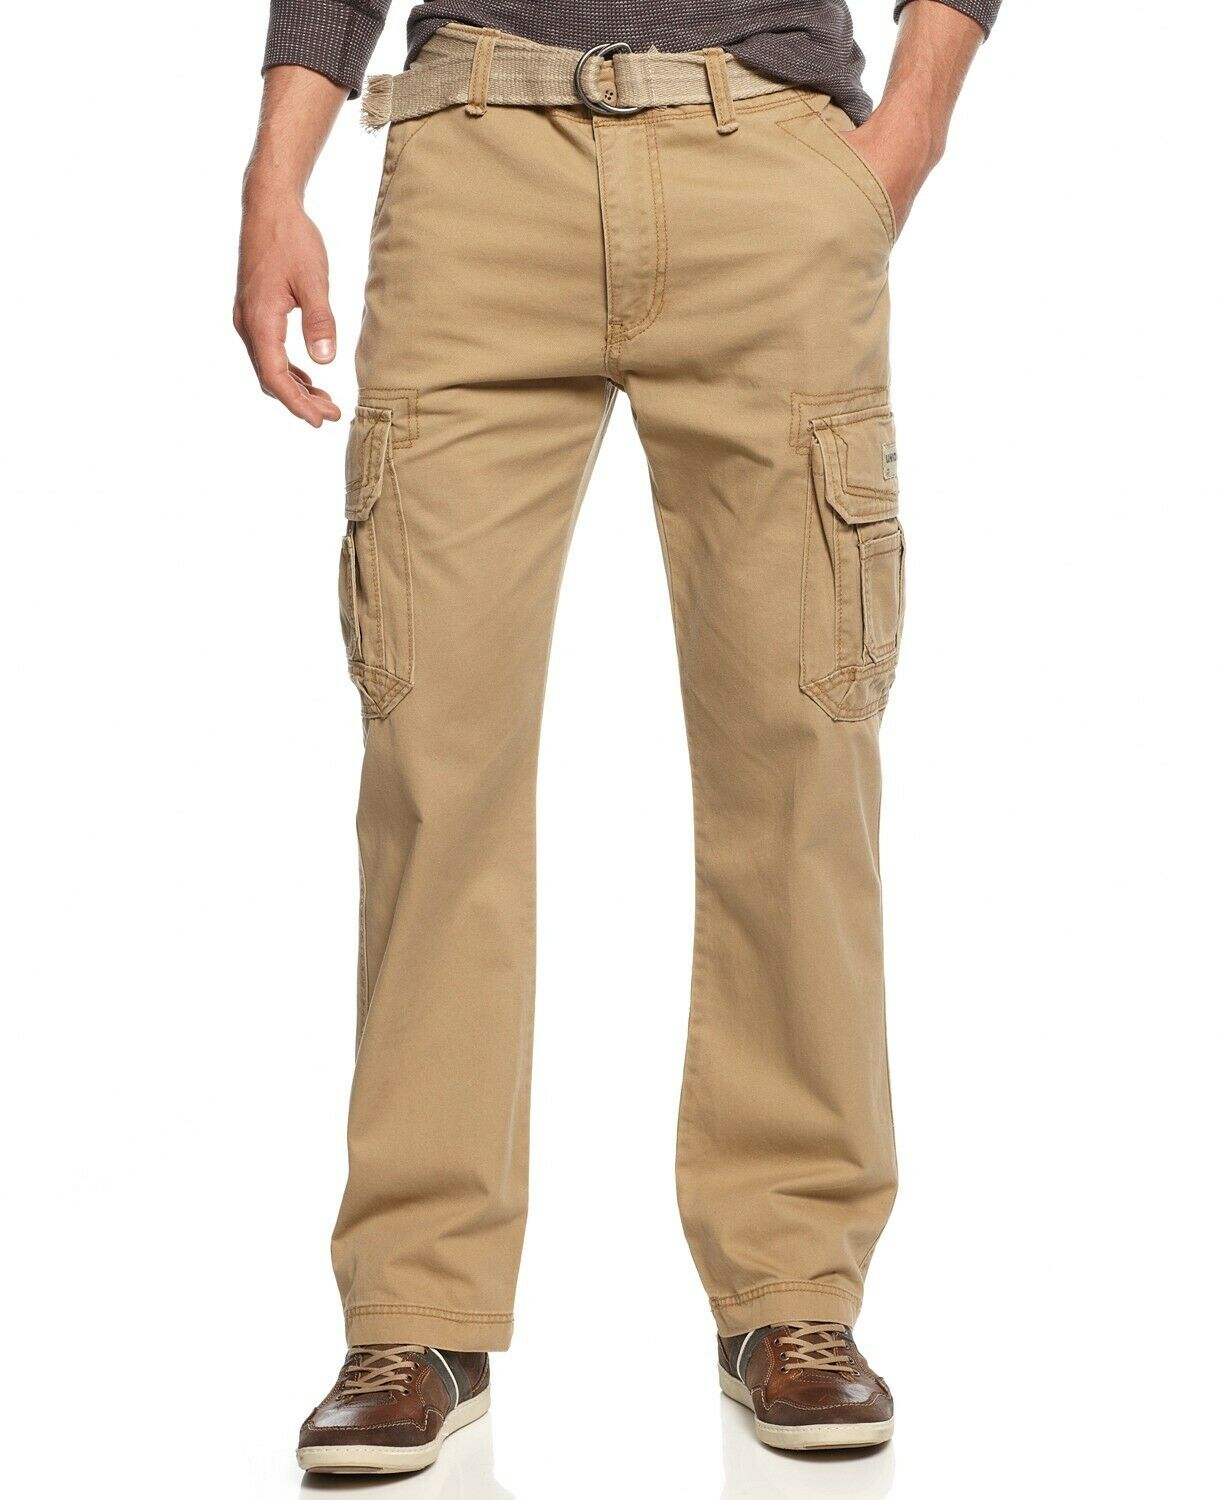 Unionbay Men's Survivor Cargo Pants Rye 30 x 30 without belt - Brands ...